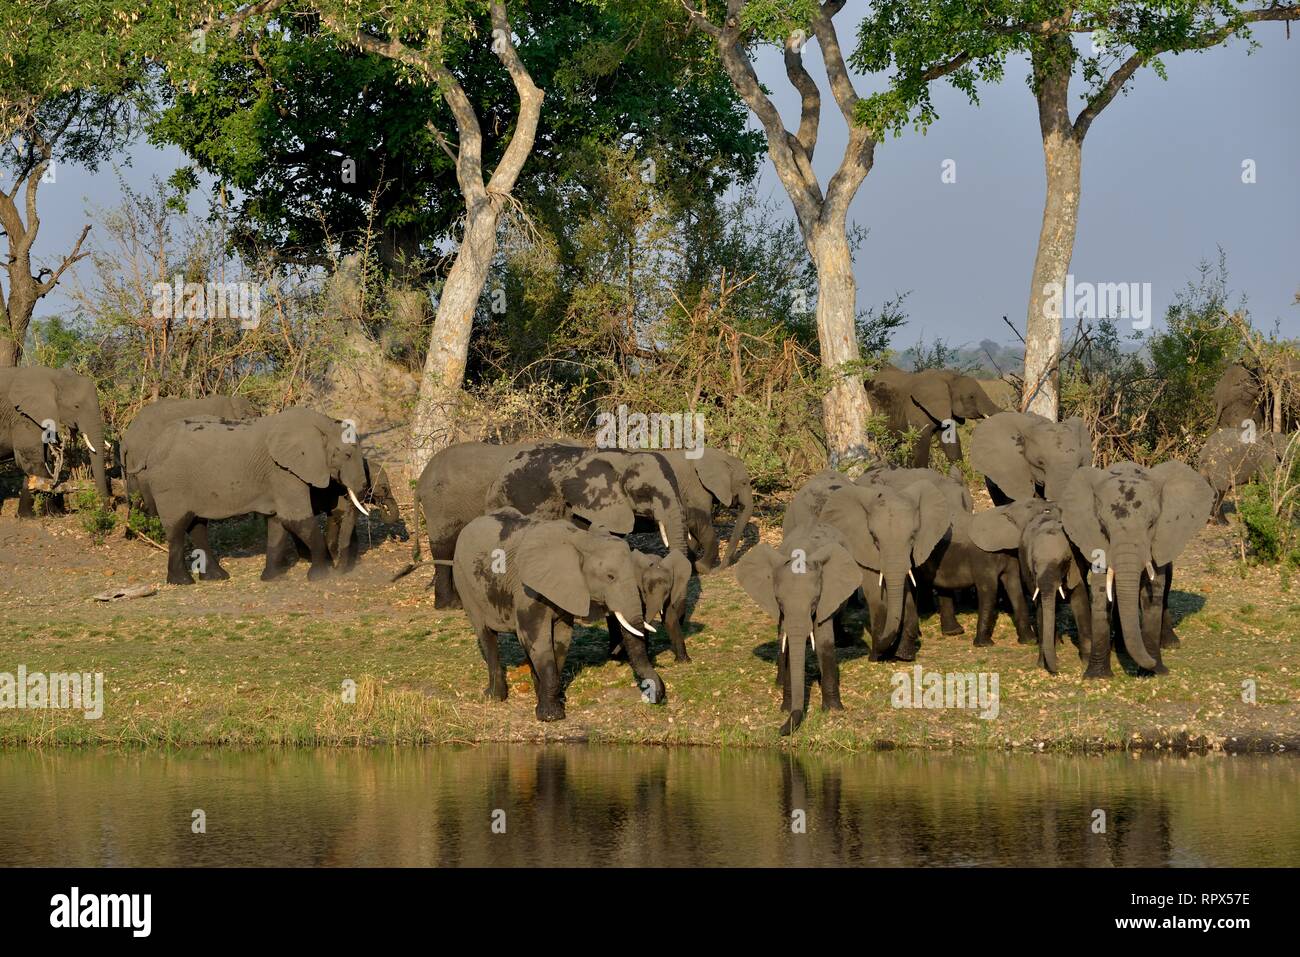 Zoologia, mammifero (mammalia), elefante africano (Loxodonta africana) sul Fiume Cuando, Bwabwata National Park, Additional-Rights-Clearance-Info-Not-Available Foto Stock